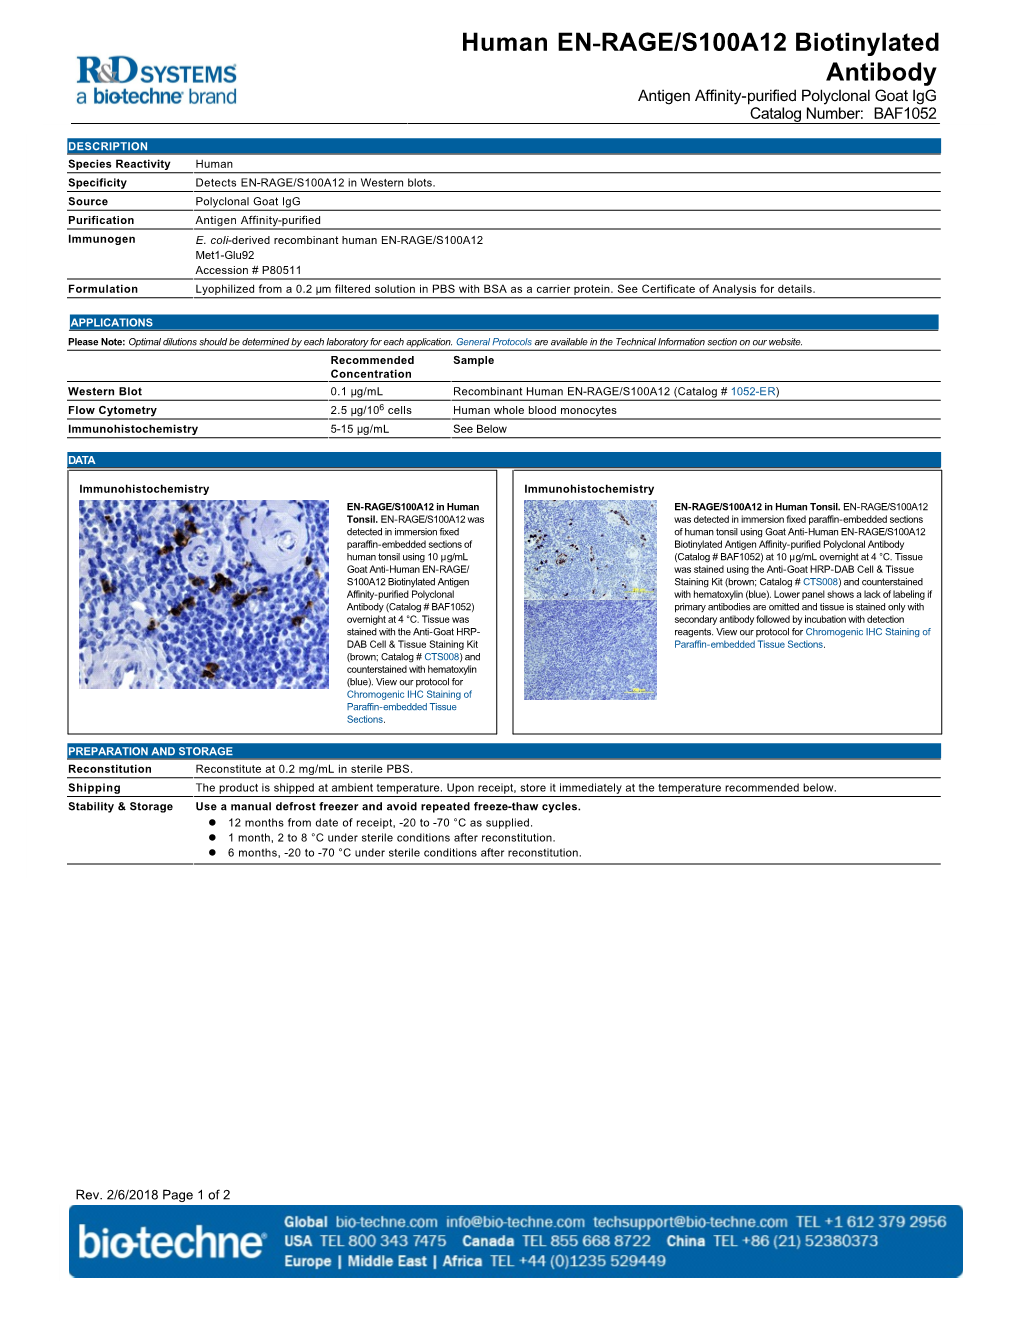 Human EN-RAGE/S100A12 Biotinylated Antibody Antigen Affinity-Purified Polyclonal Goat Igg Catalog Number: BAF1052